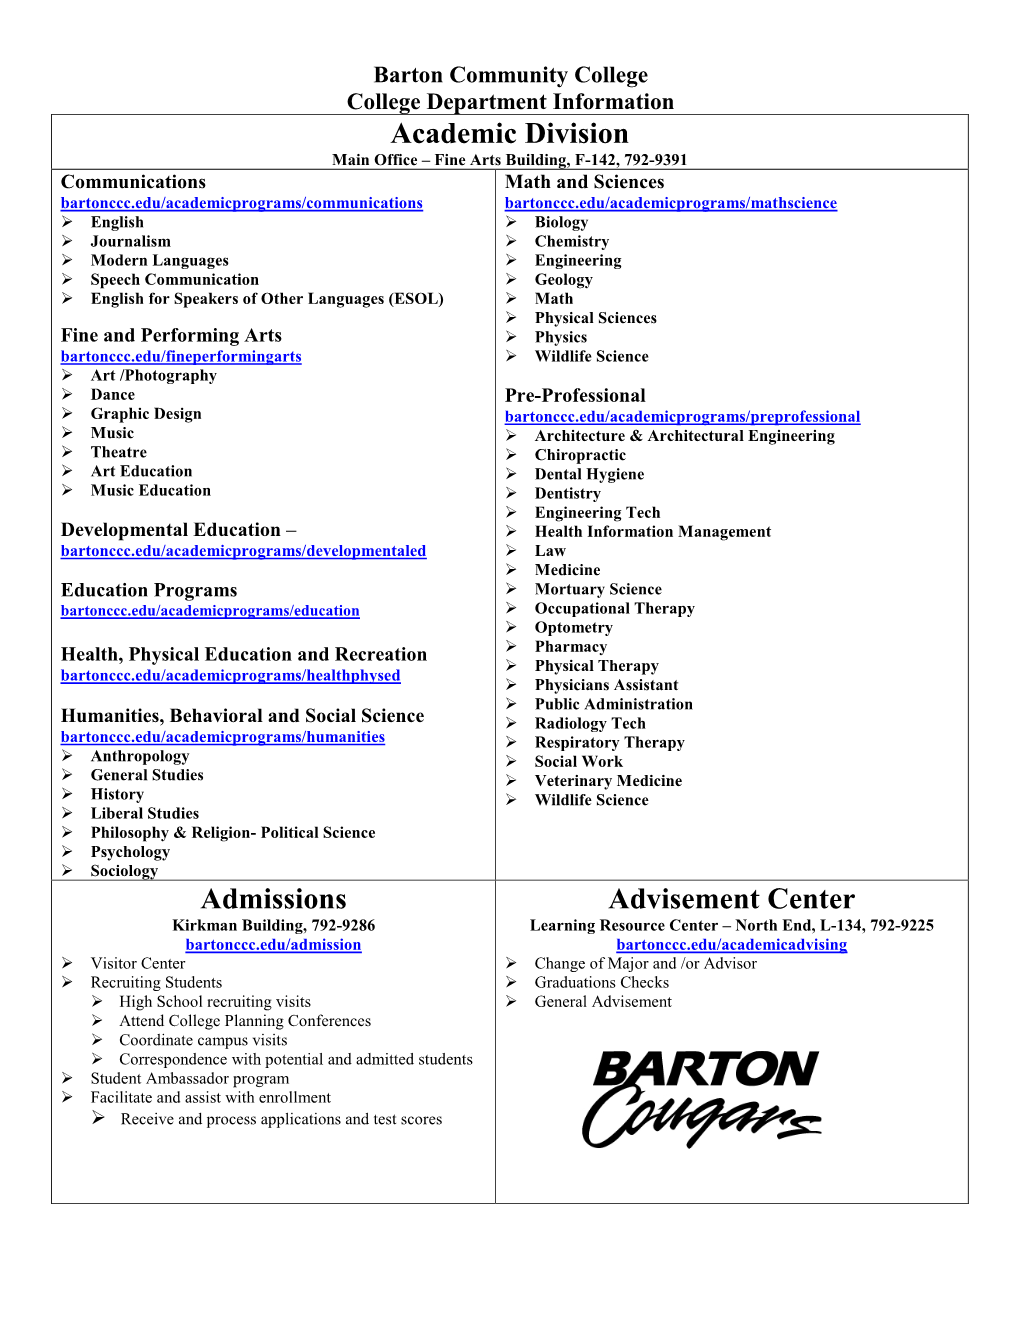 Barton Community College College Department Information